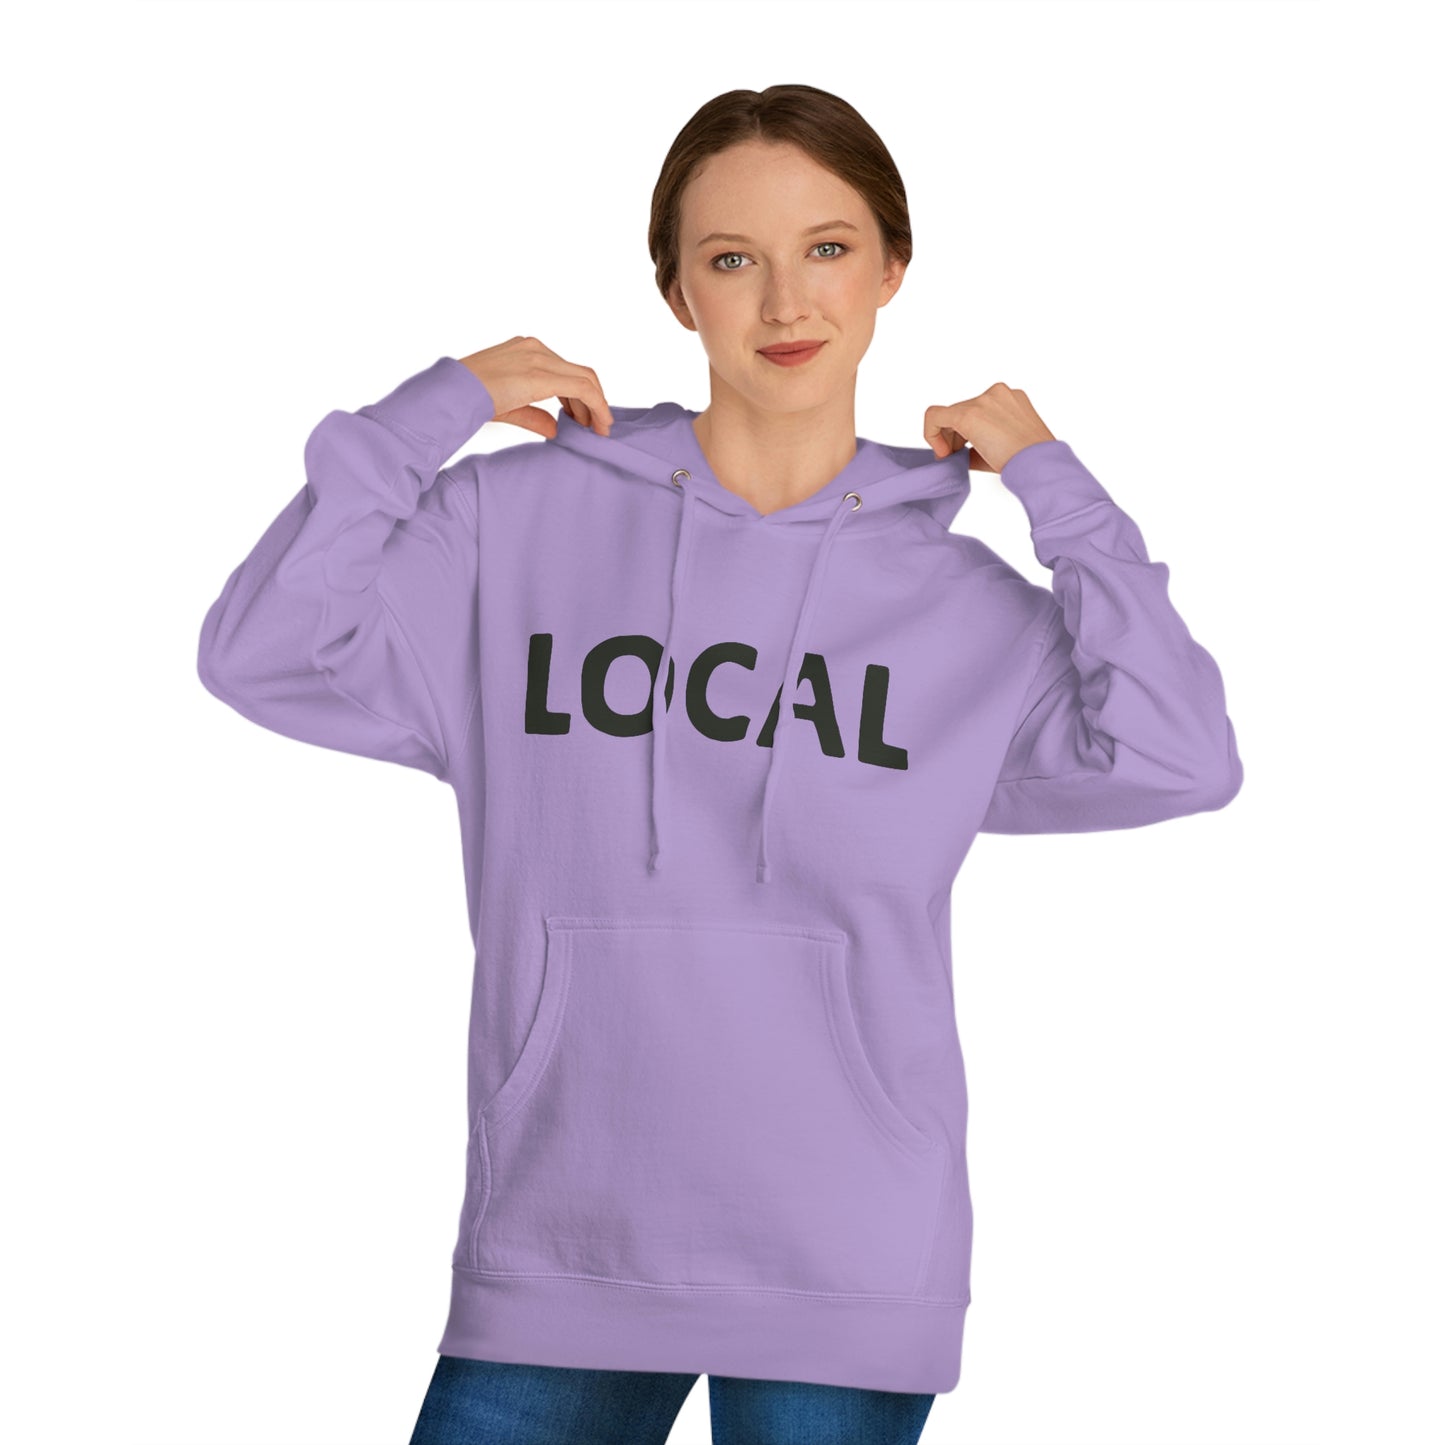 Local Unisex Hooded Sweatshirt